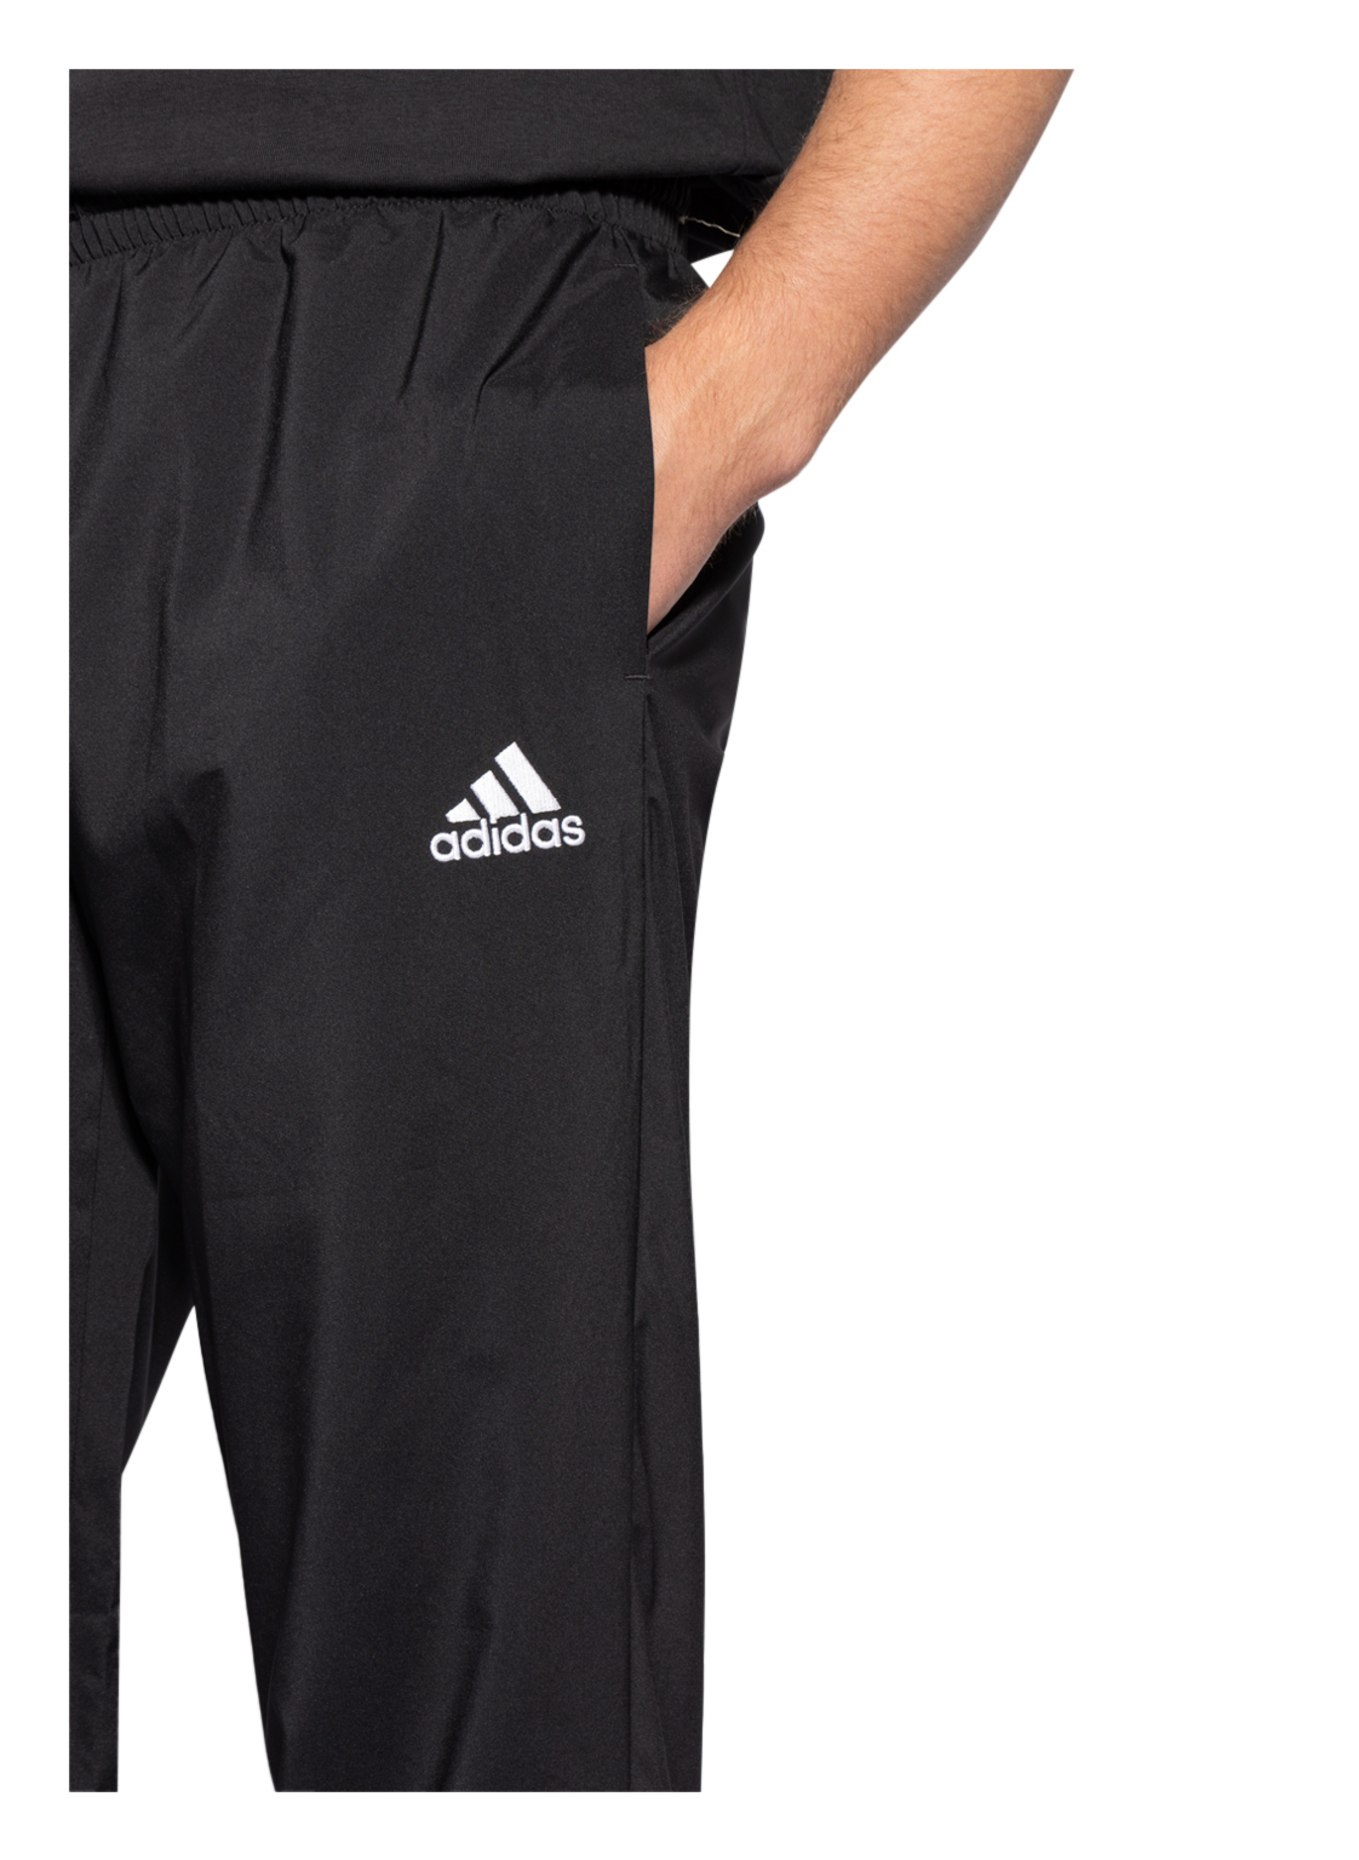 adidas Tiro 17 Training Pants - Black